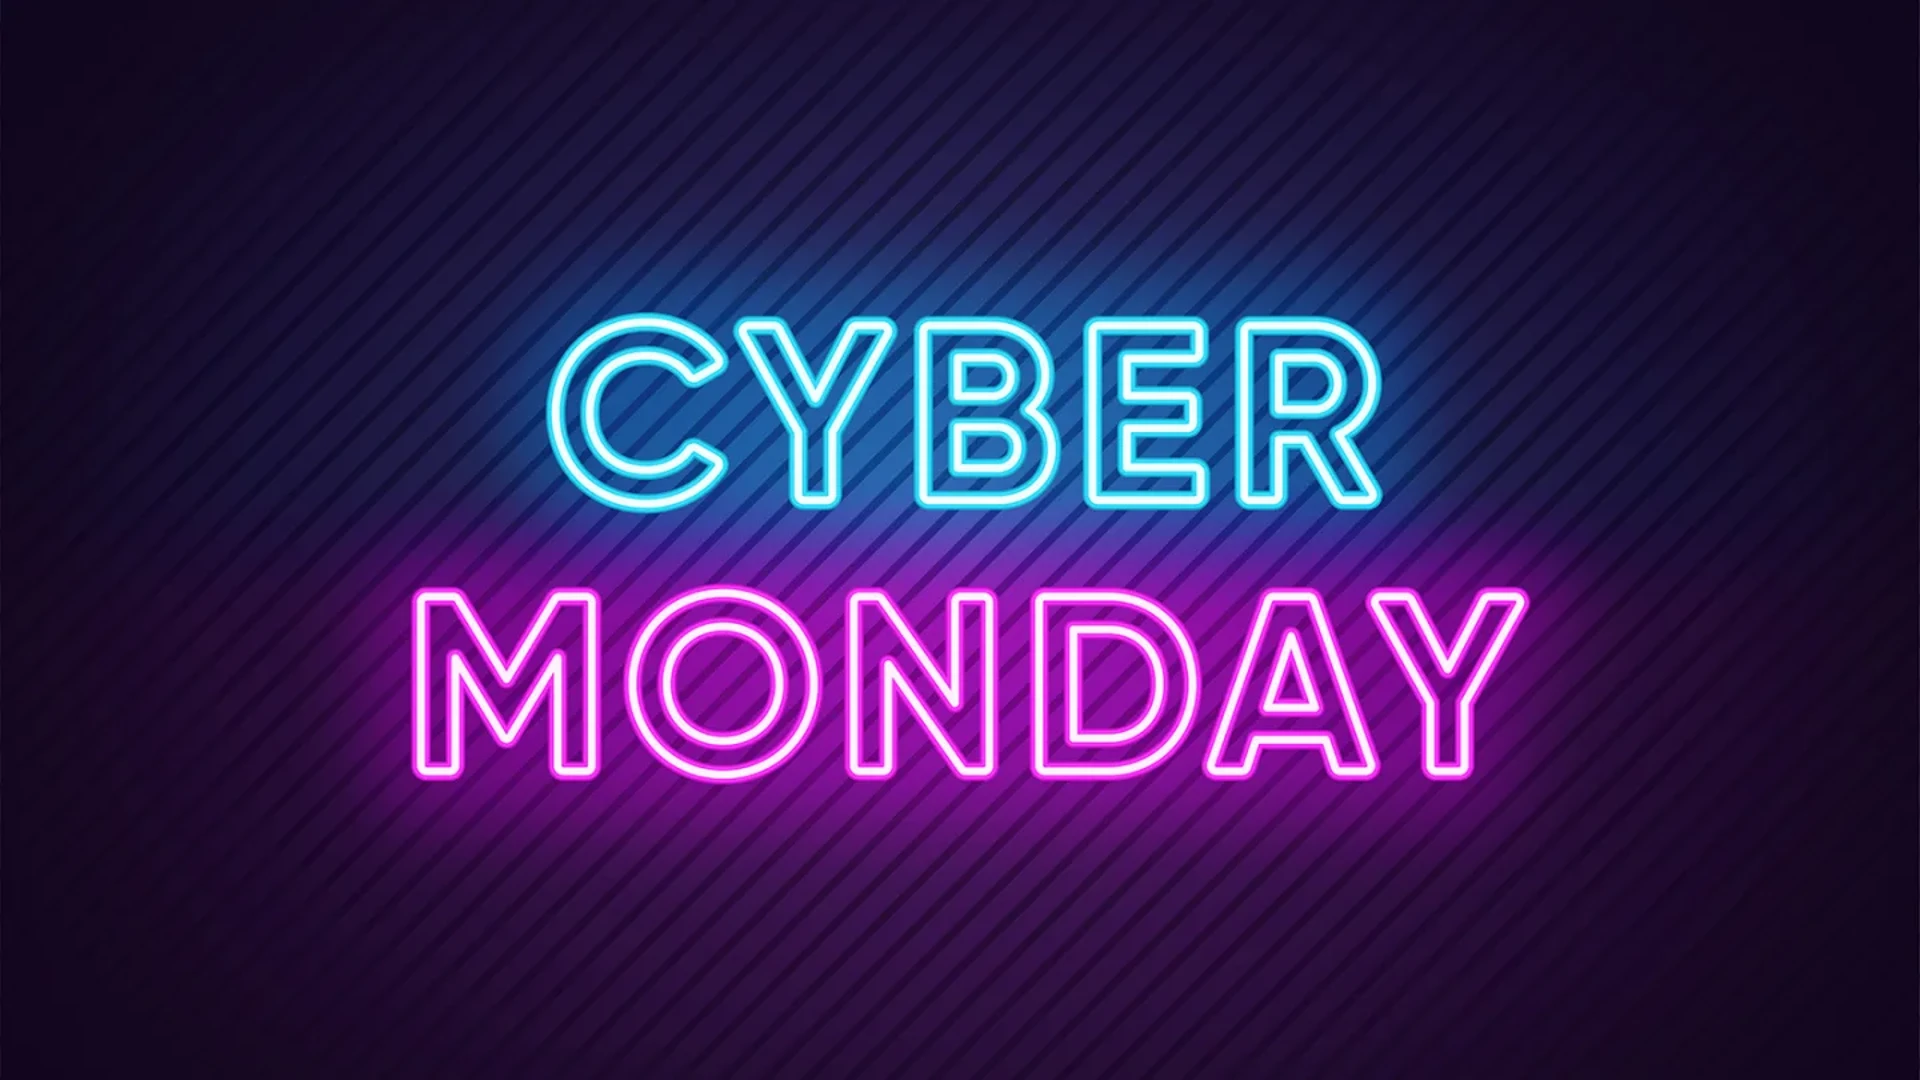 Cyber Monday Deals 2022